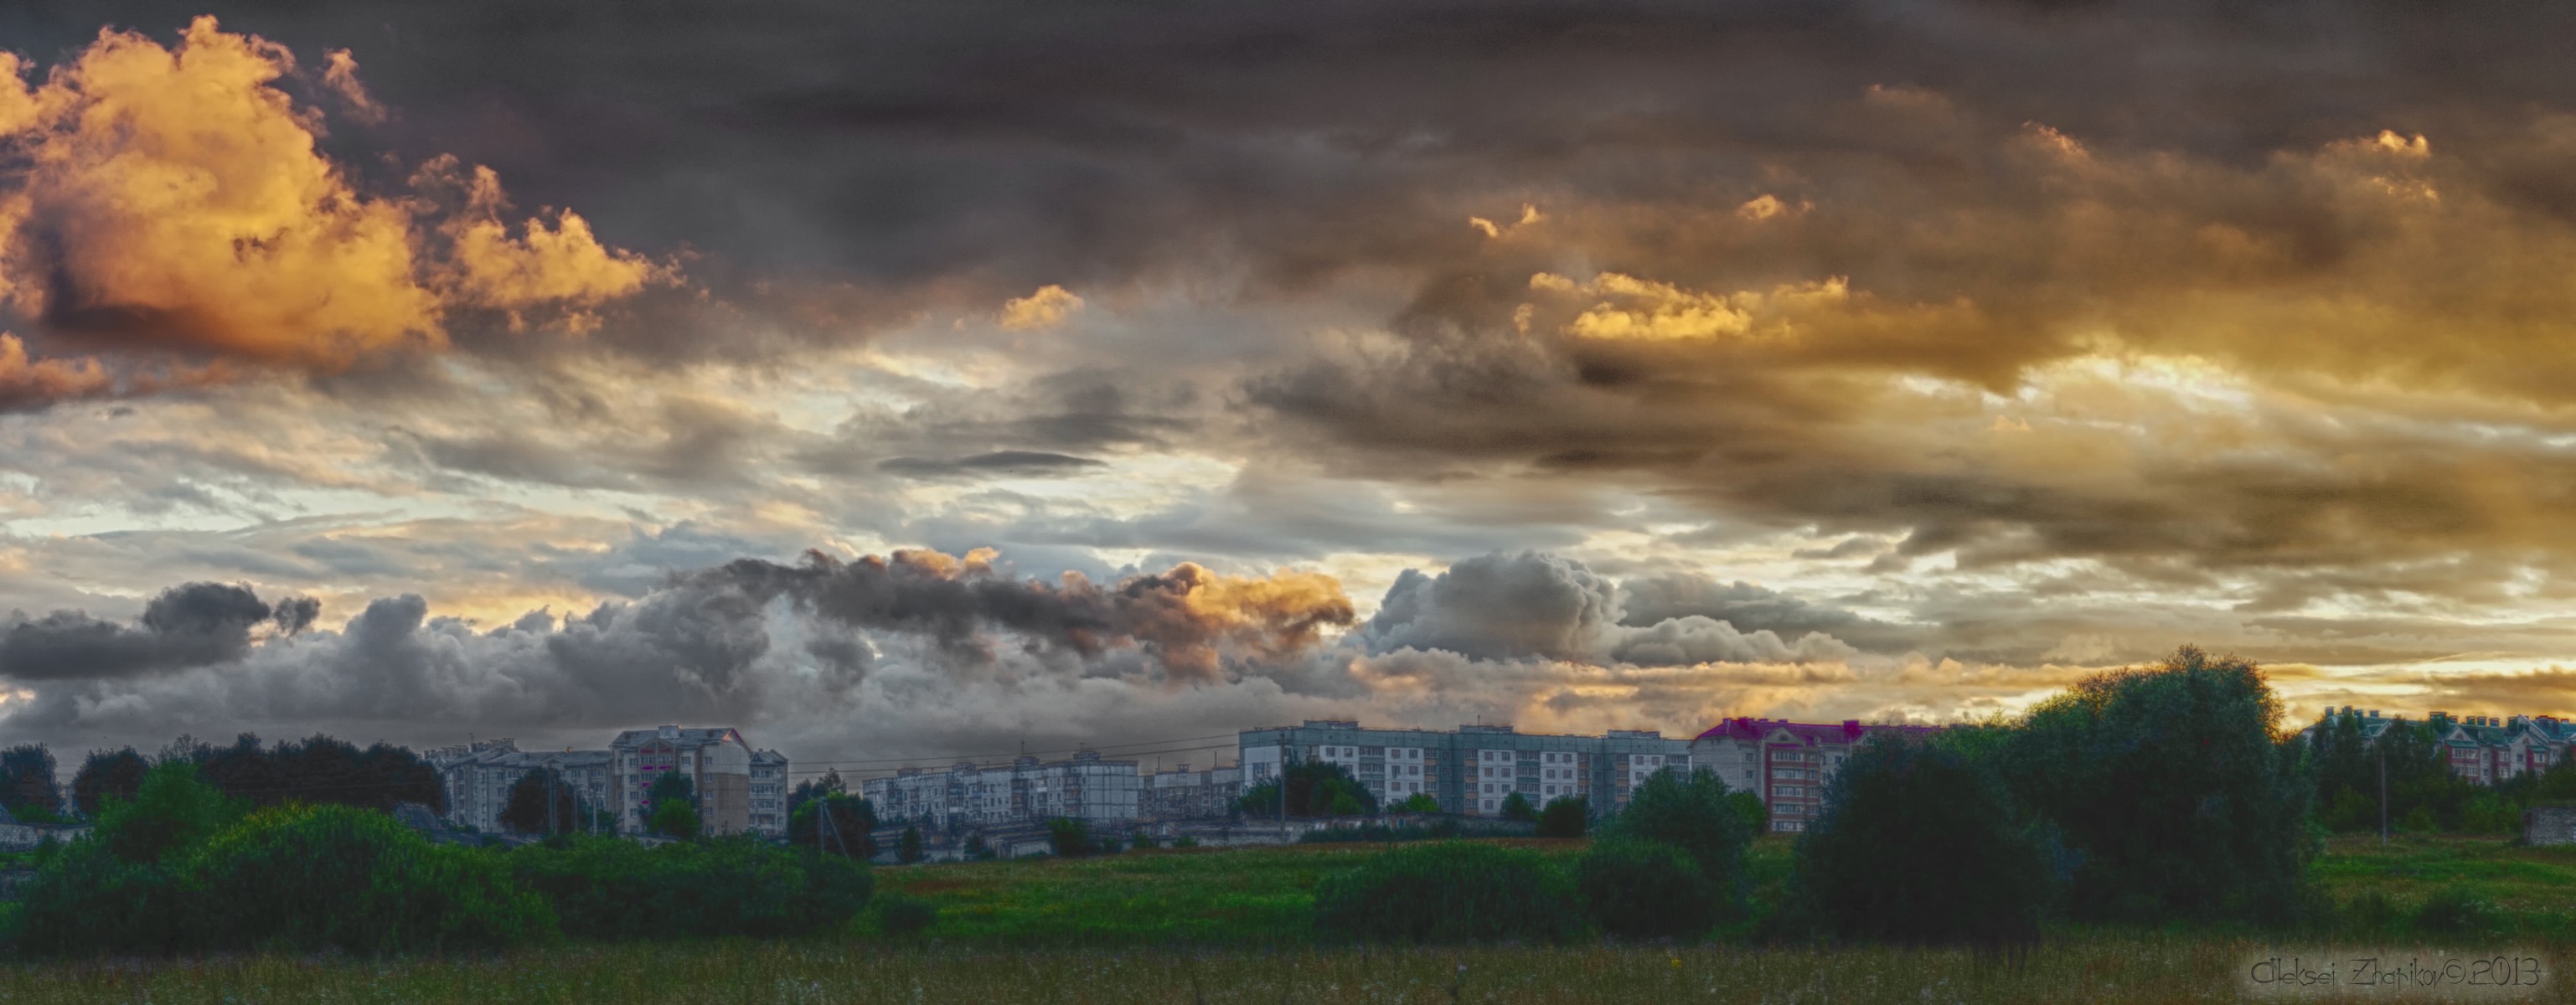 закат | Фотограф Алексей Жариков | foto.by фото.бай